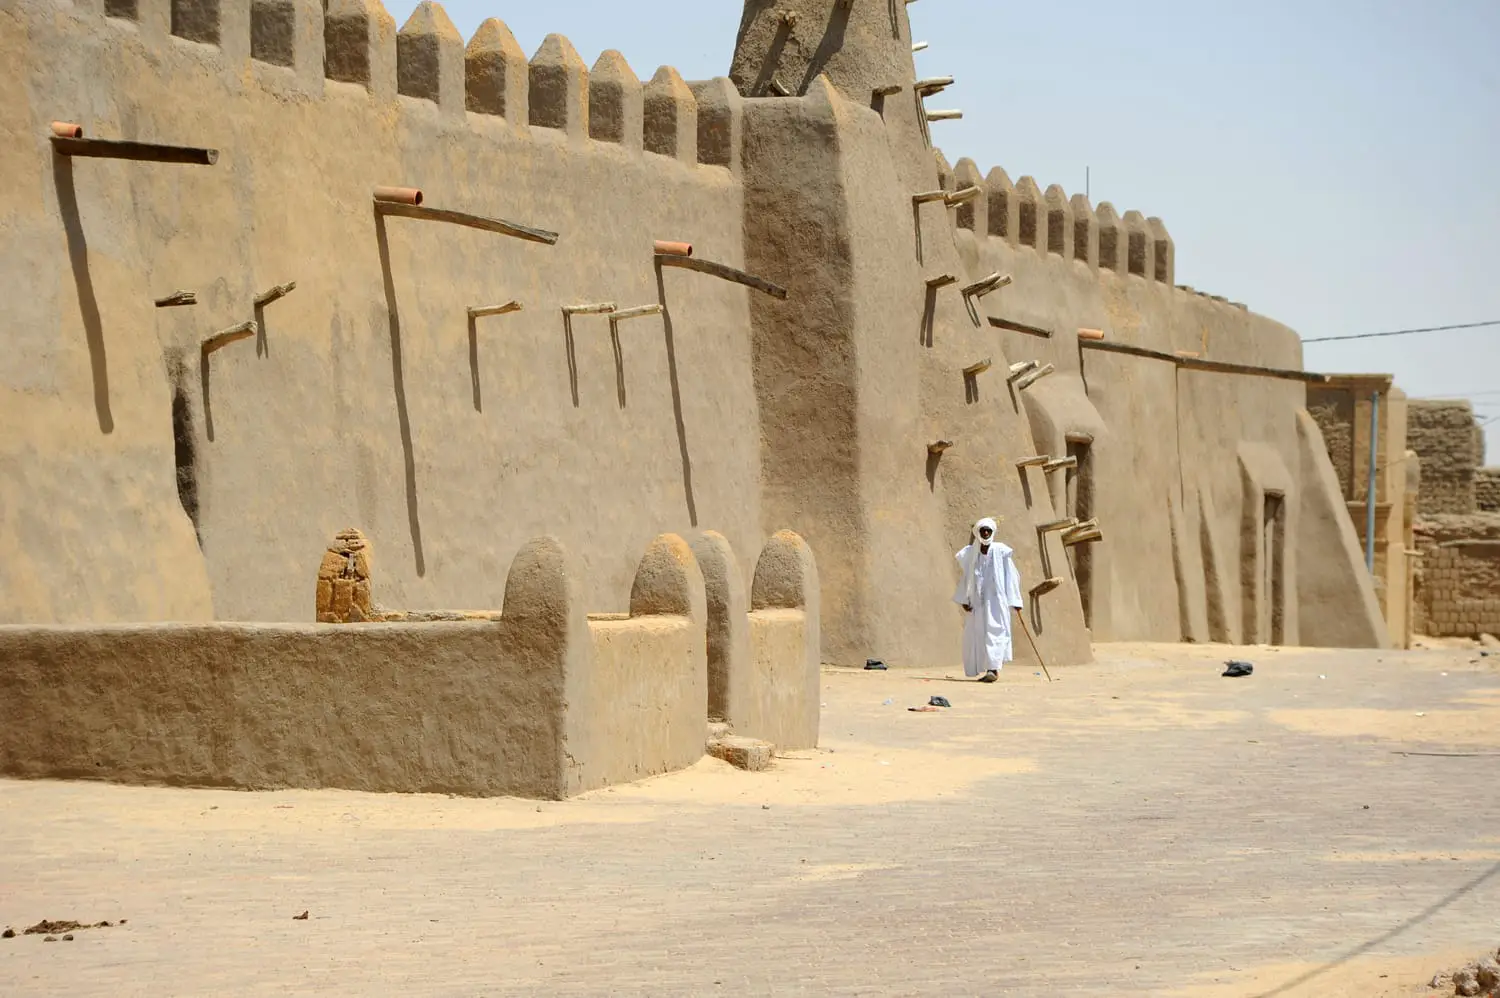 Timbuktu, Mali, Africa